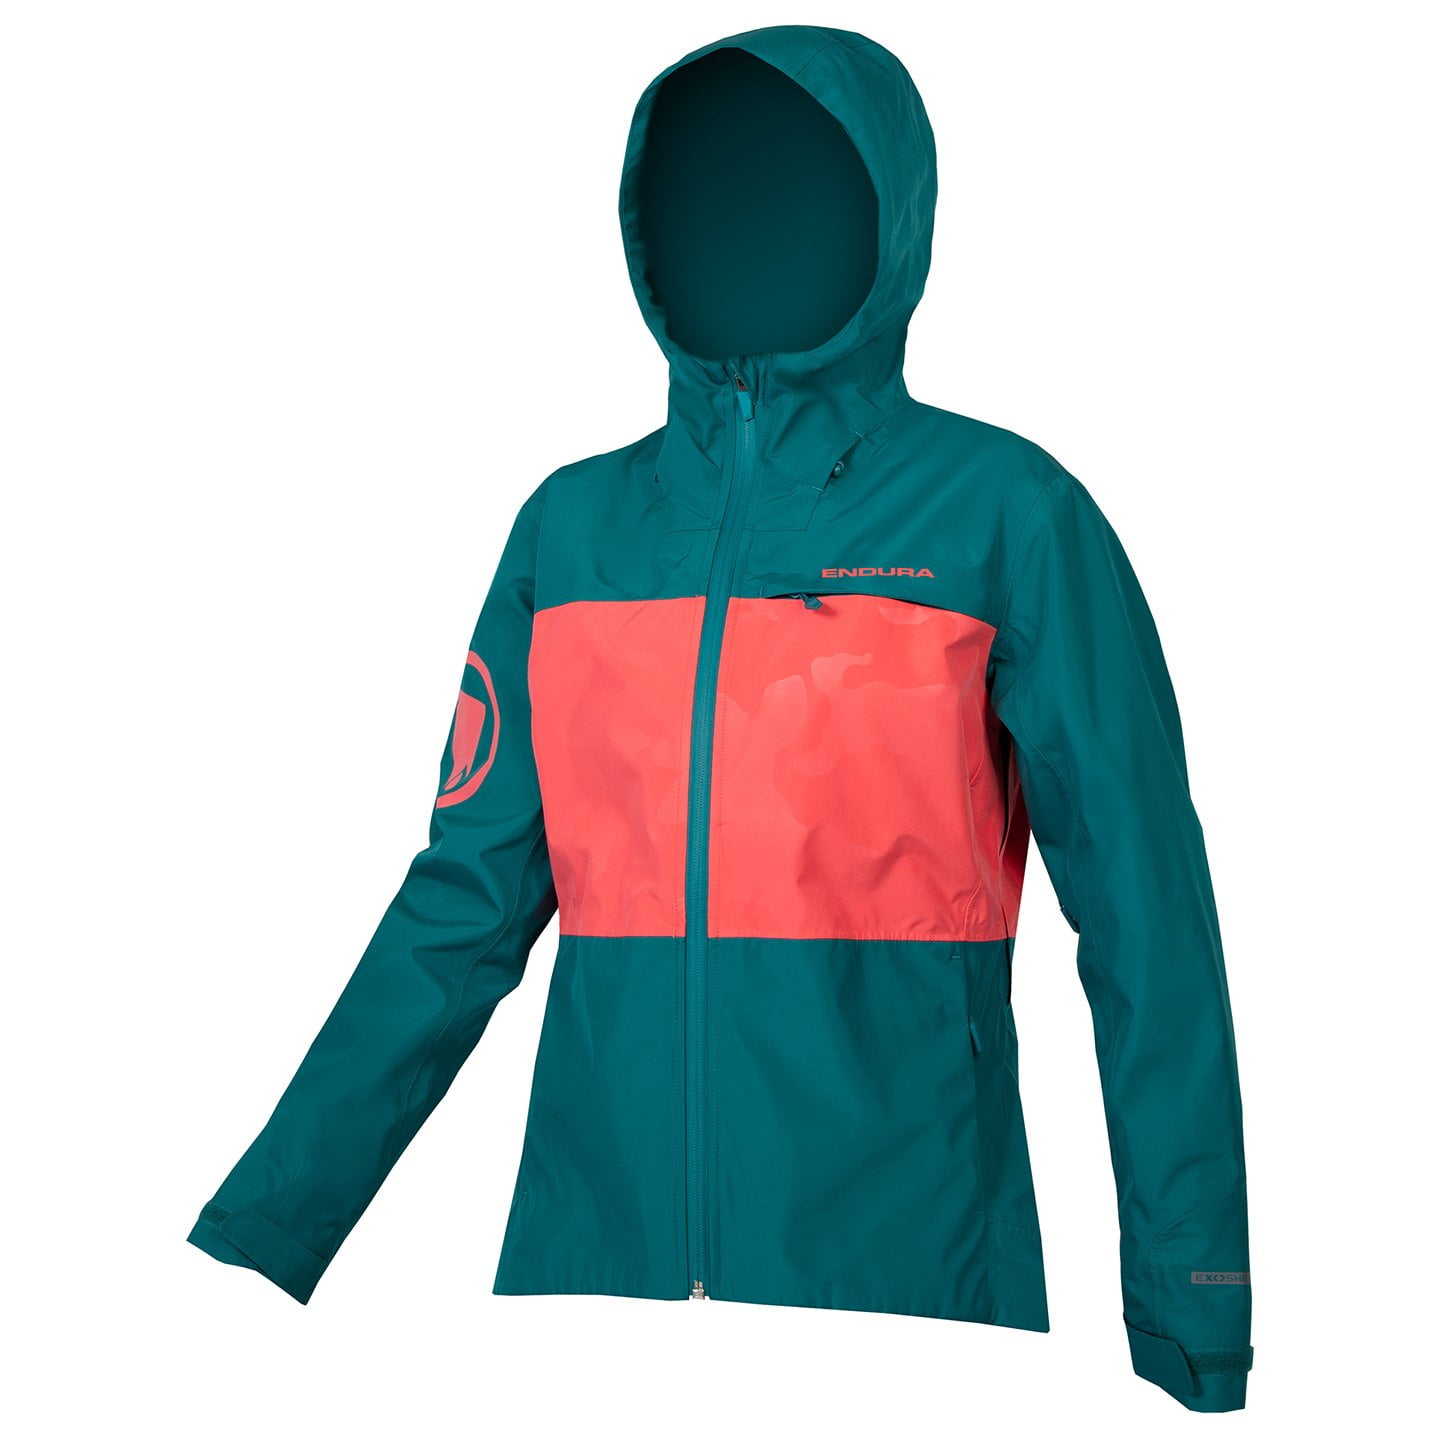 ENDURA Singletrack II Women’s Waterproof Jacket Women’s Waterproof Jacket, size M, Bike jacket, Cycling clothing